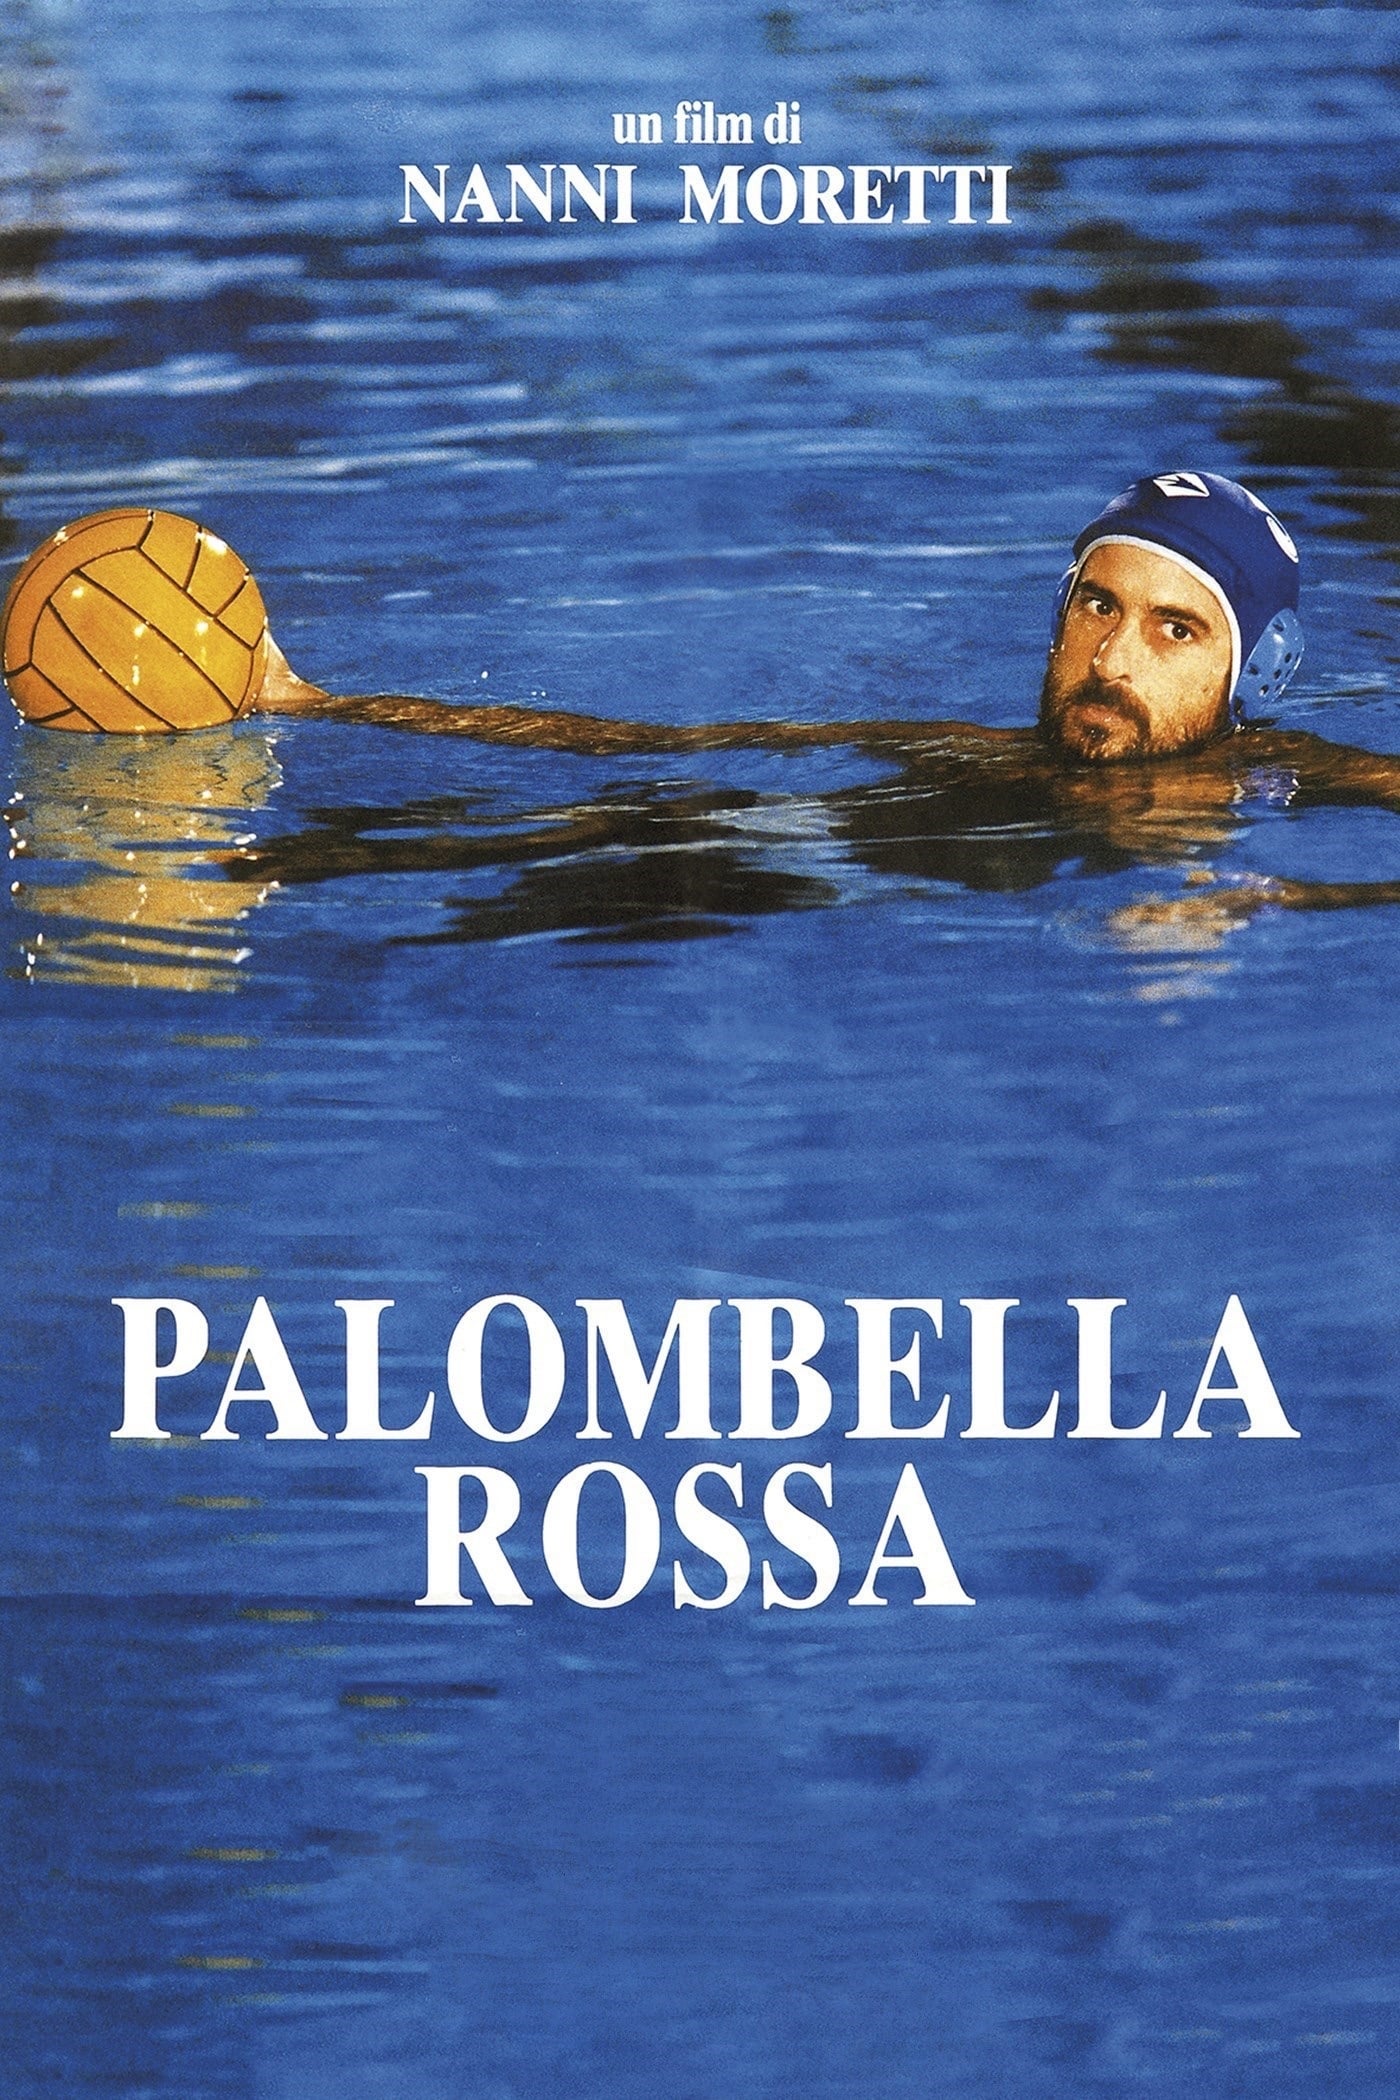 Palombella rossa [HD] (1989)